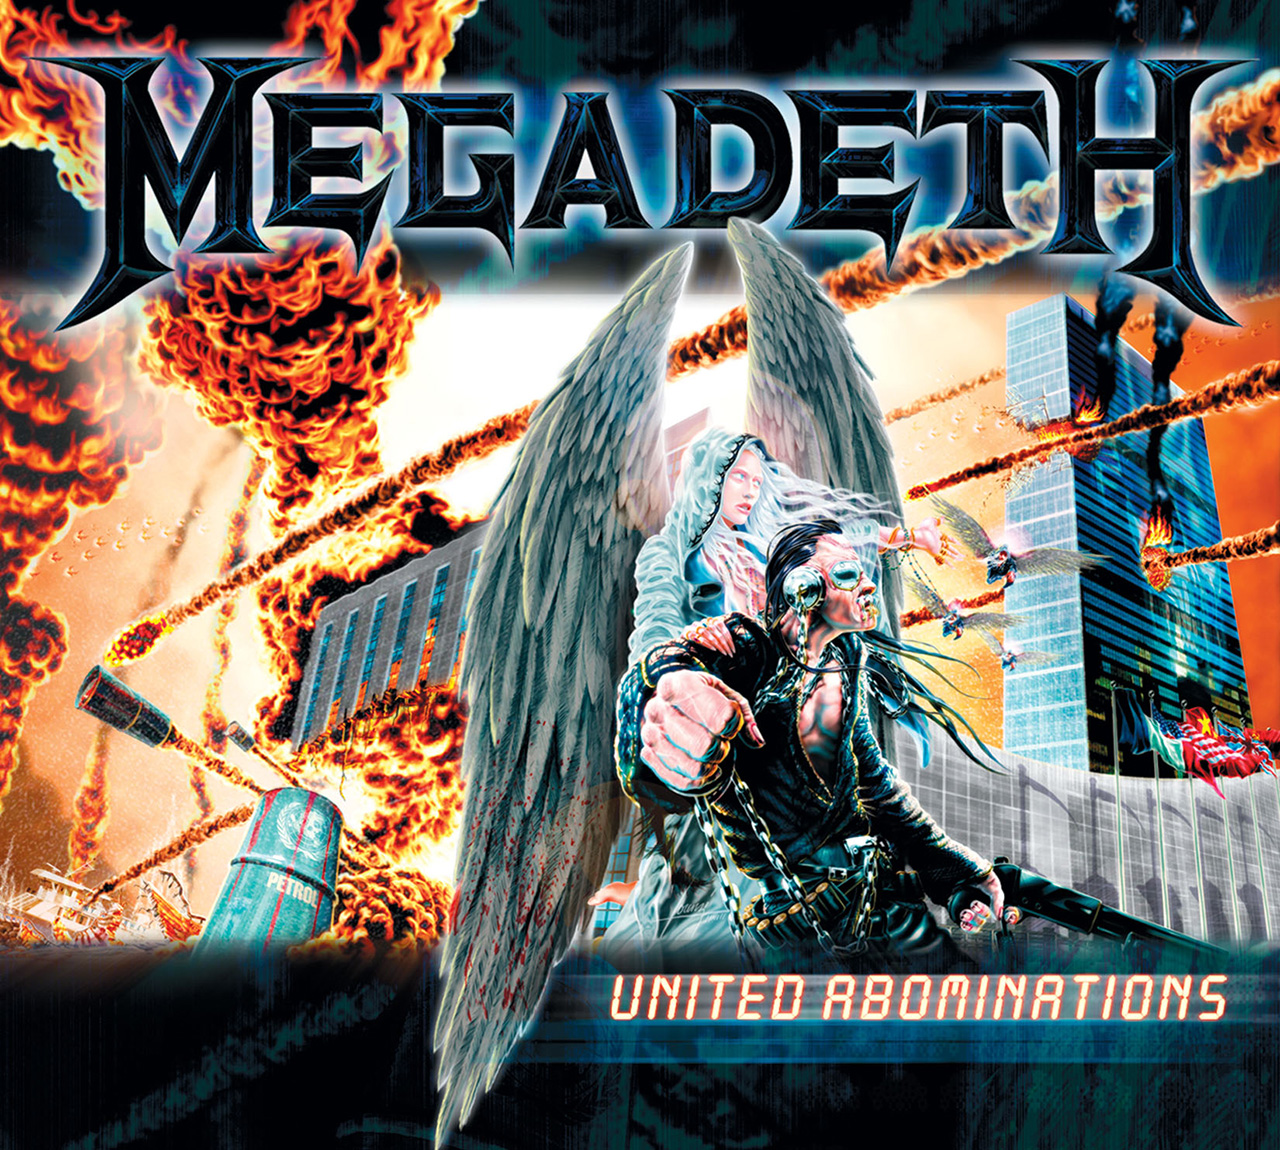 Megadeth rust in peace polaris текст фото 97